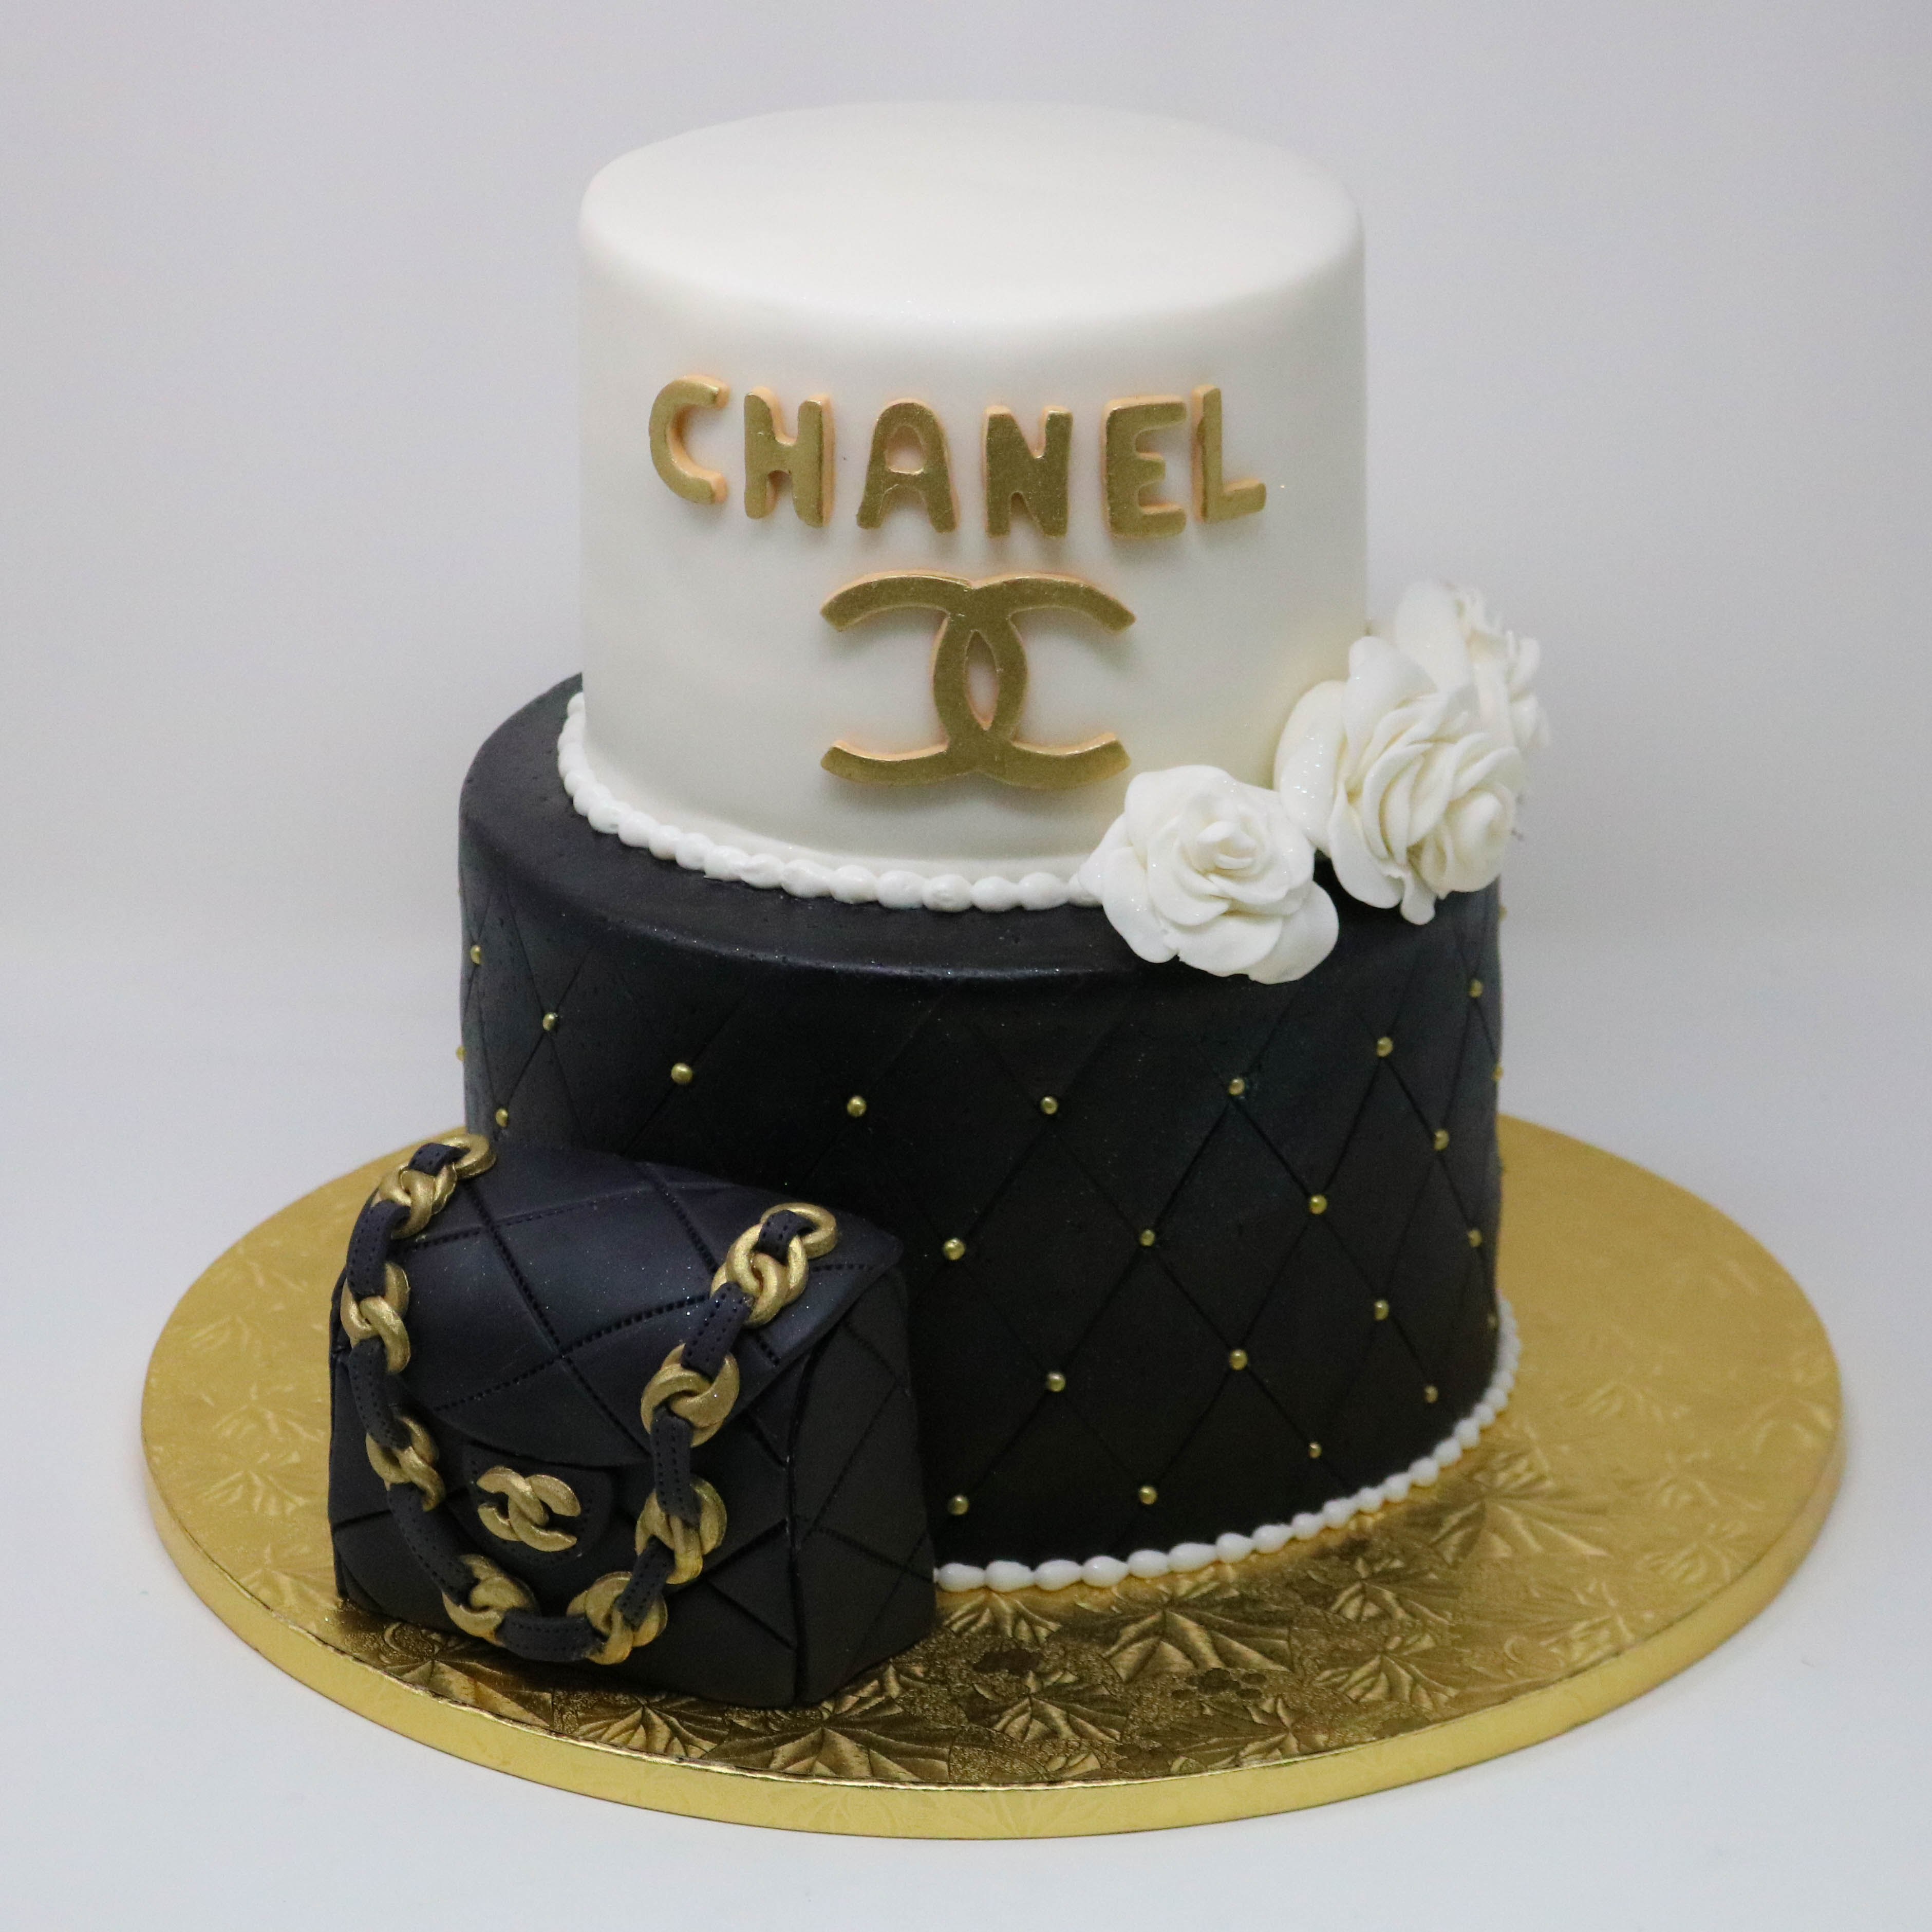 CHANEL Classic Flap Bag Cake Topper #chanelflapbag #chanel